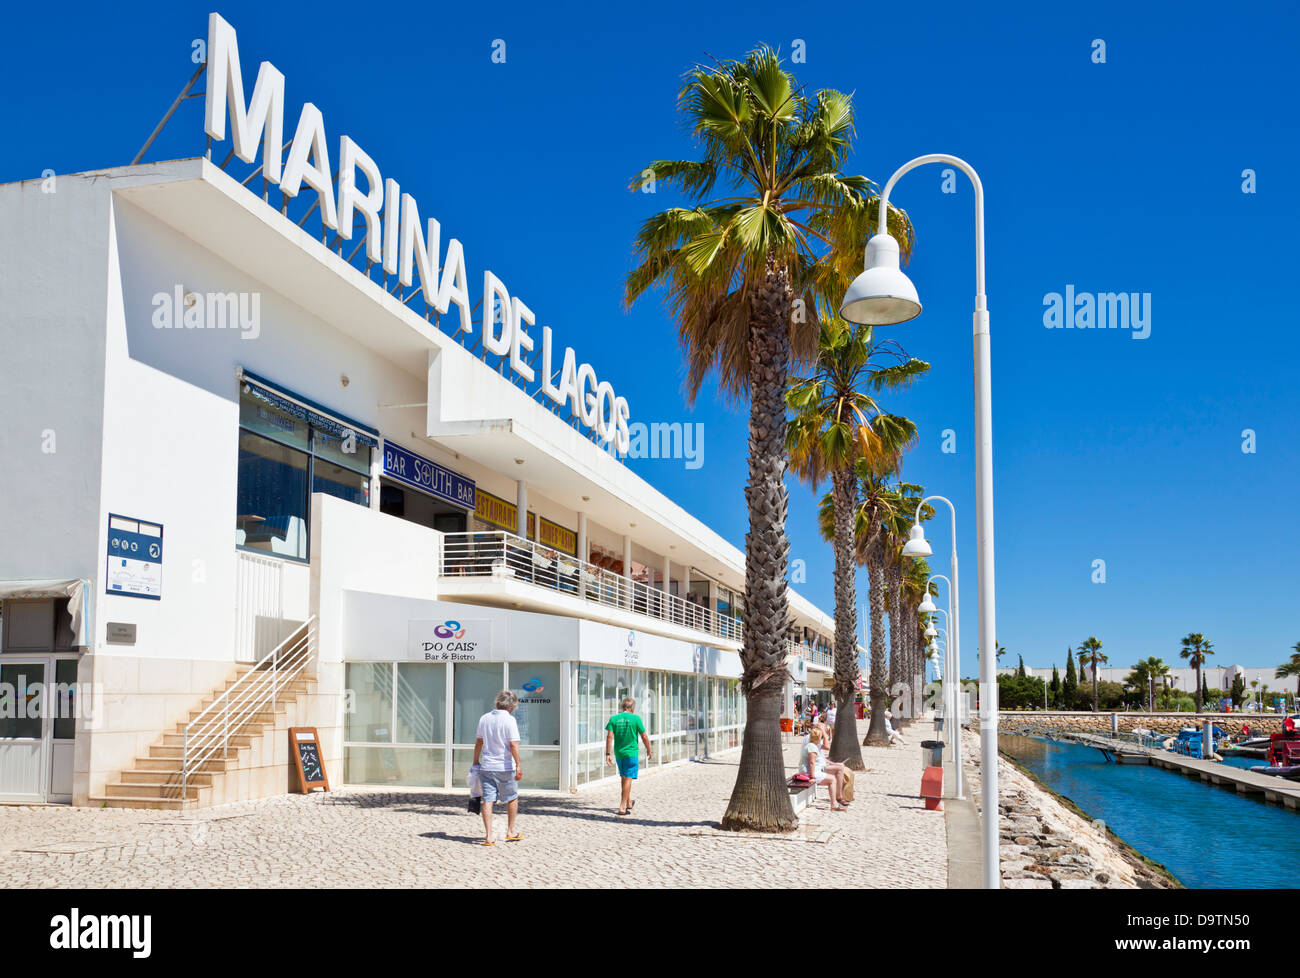 Marina de Lagos Algarve Portugal EU Europe Stock Photo